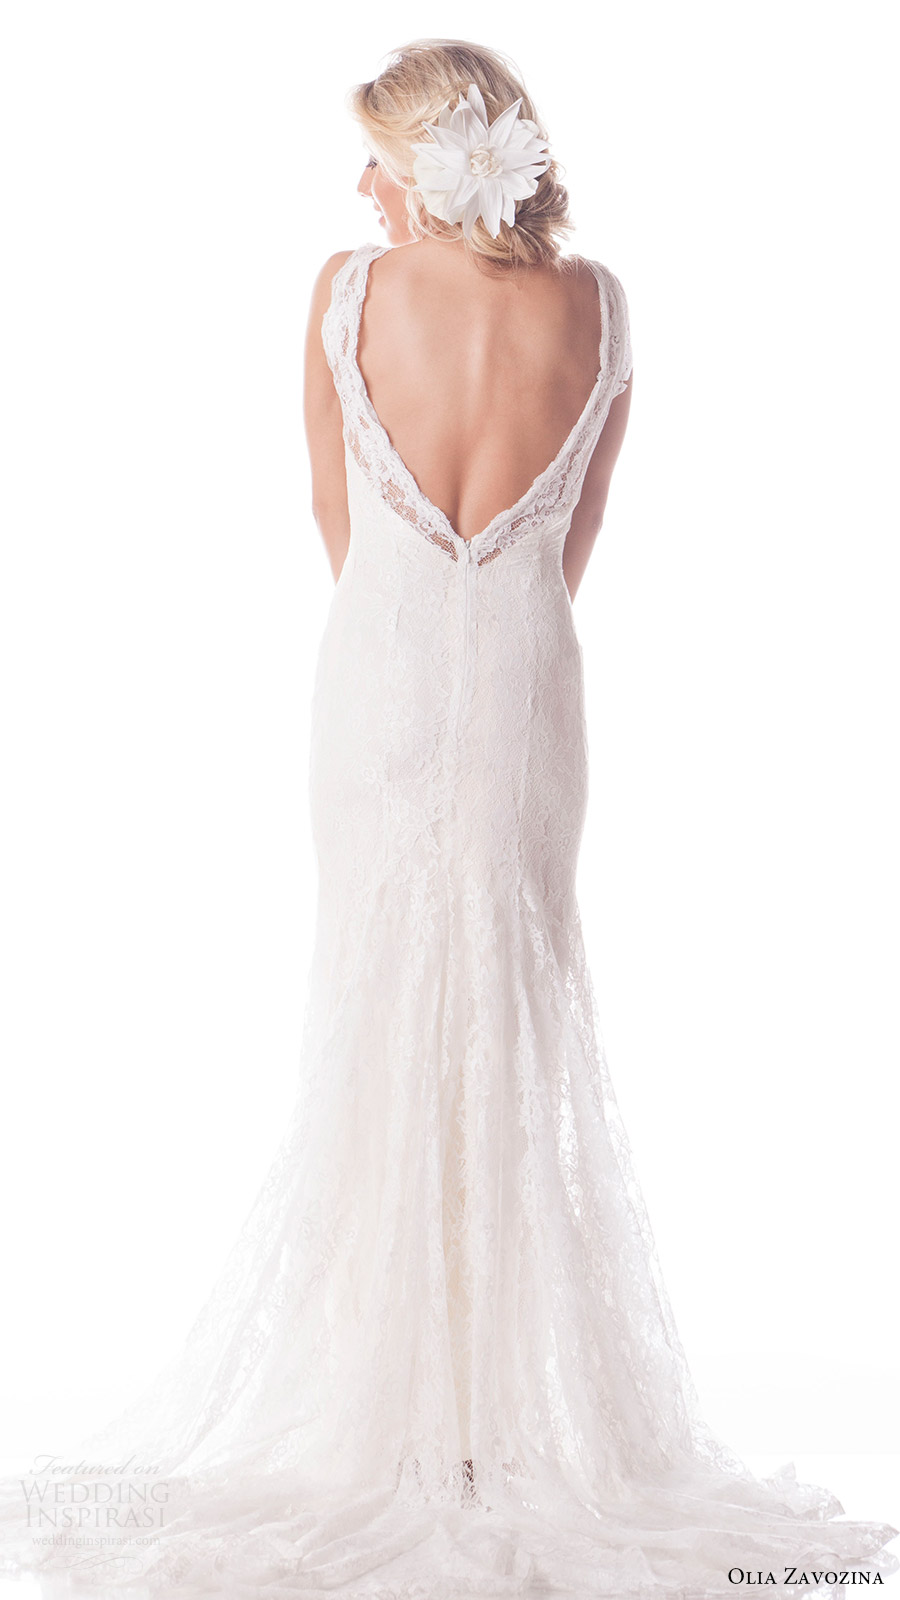 olia zavozina bridal spring 2017 sleeveless vneck 2 piece lace overlay fit flare wedding dress (heather) bv low back train